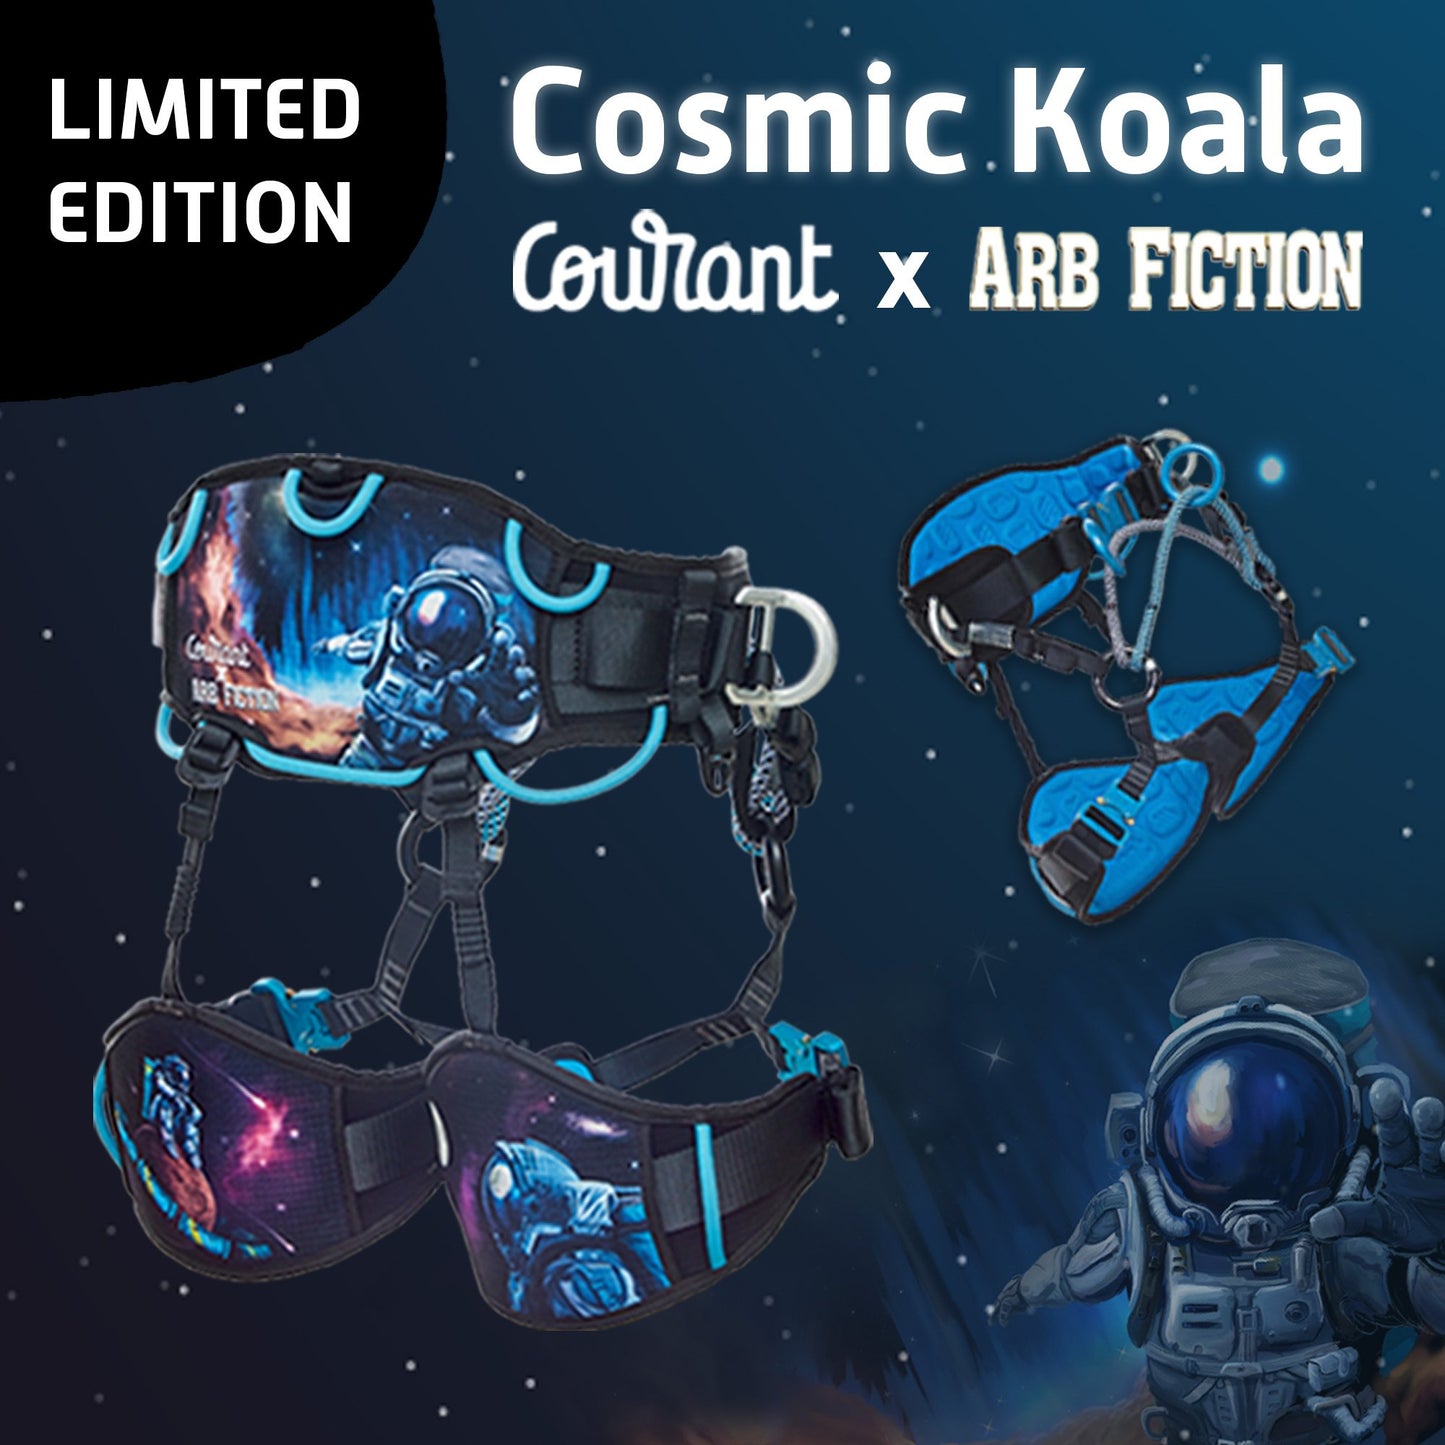 Cosmic Koala Harness by Courant X Arbfiction (Ltd Edition)